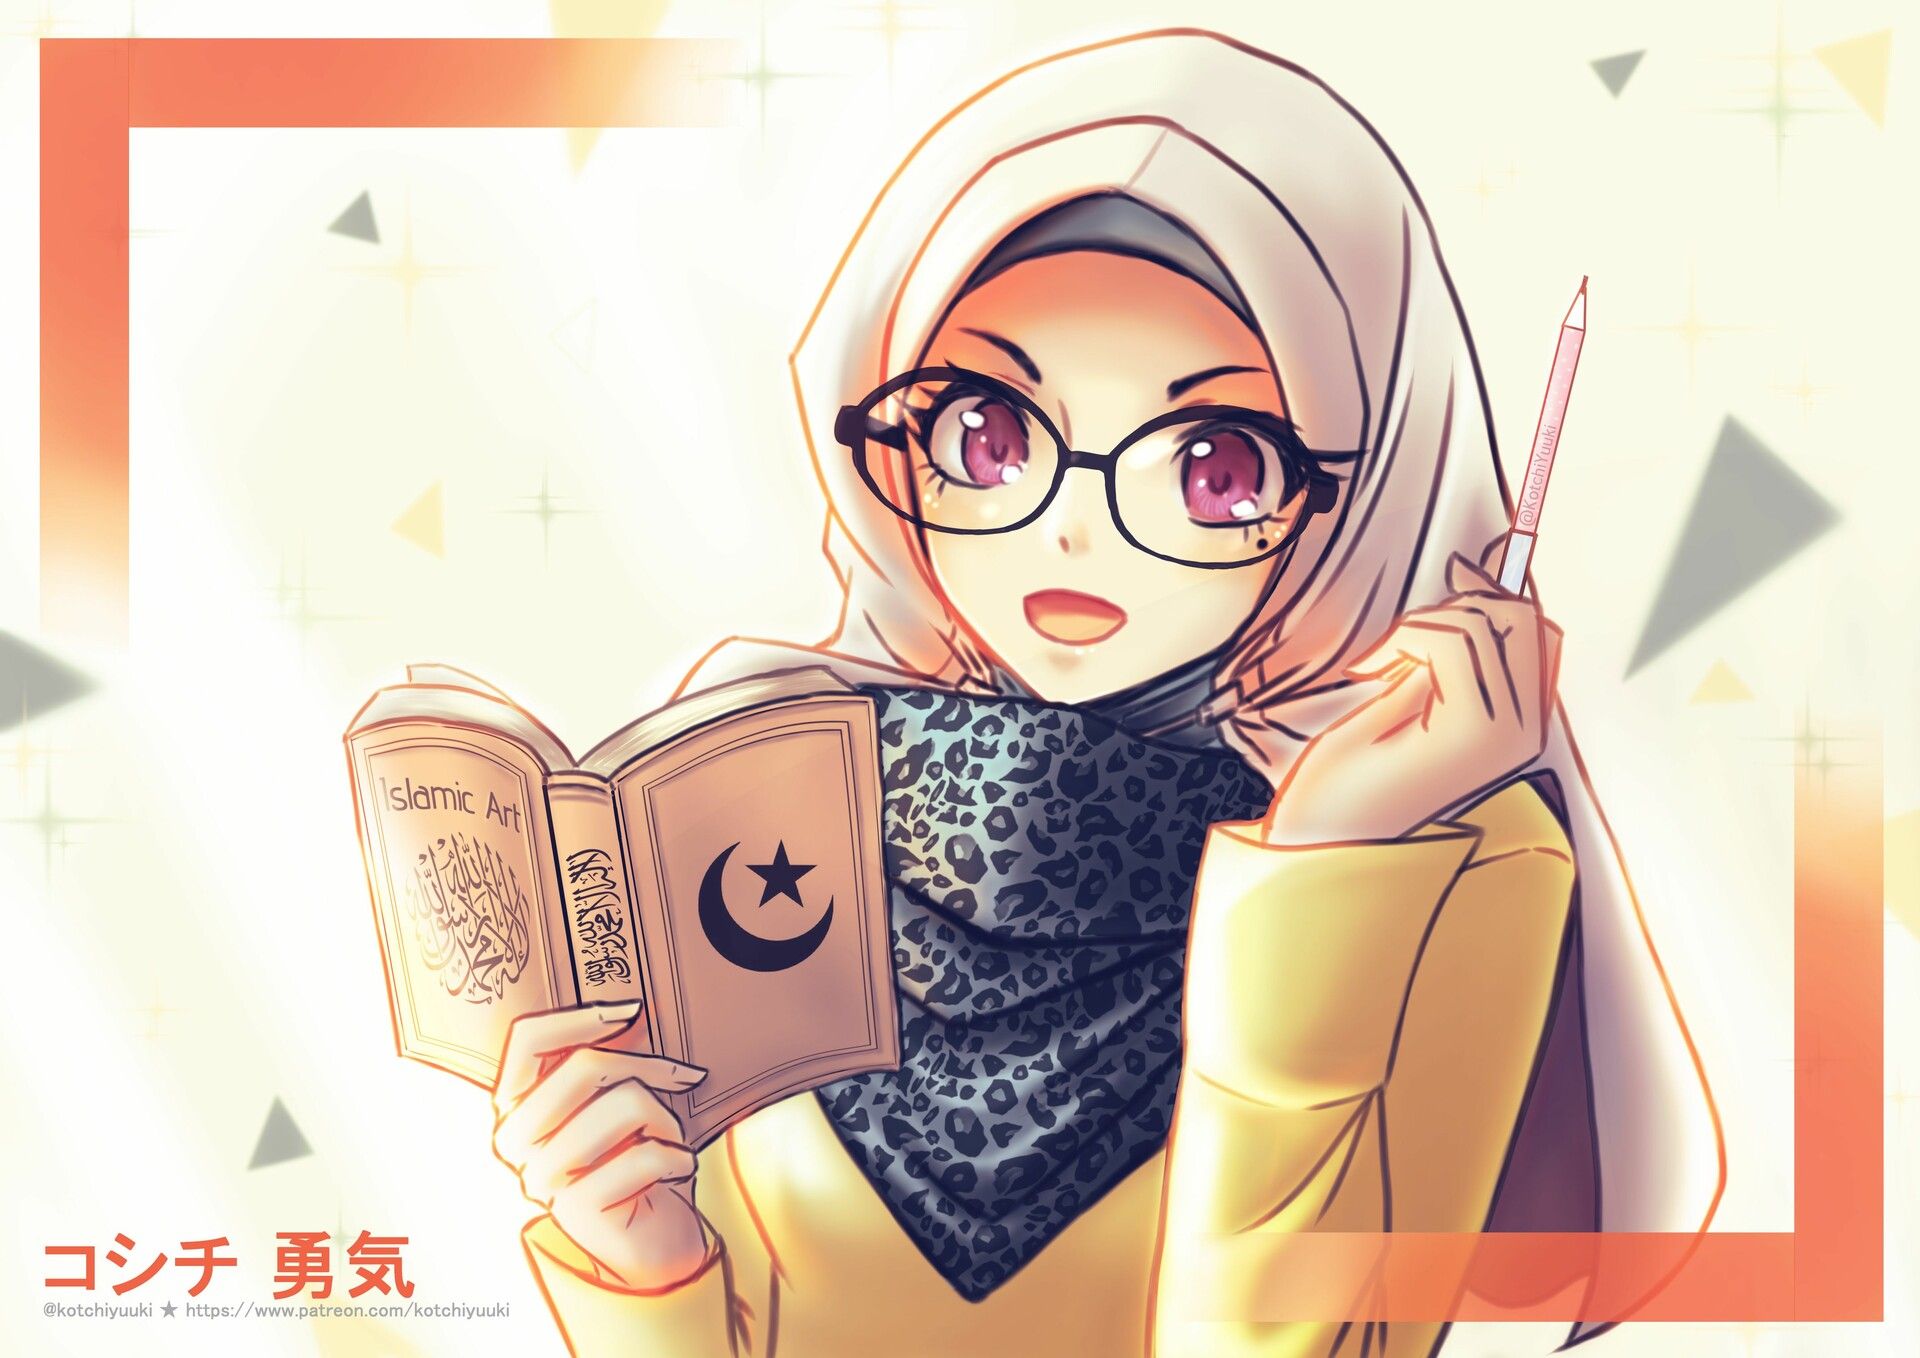 Hijab Girl Cartoon Wallpapers - Wallpaper Cave